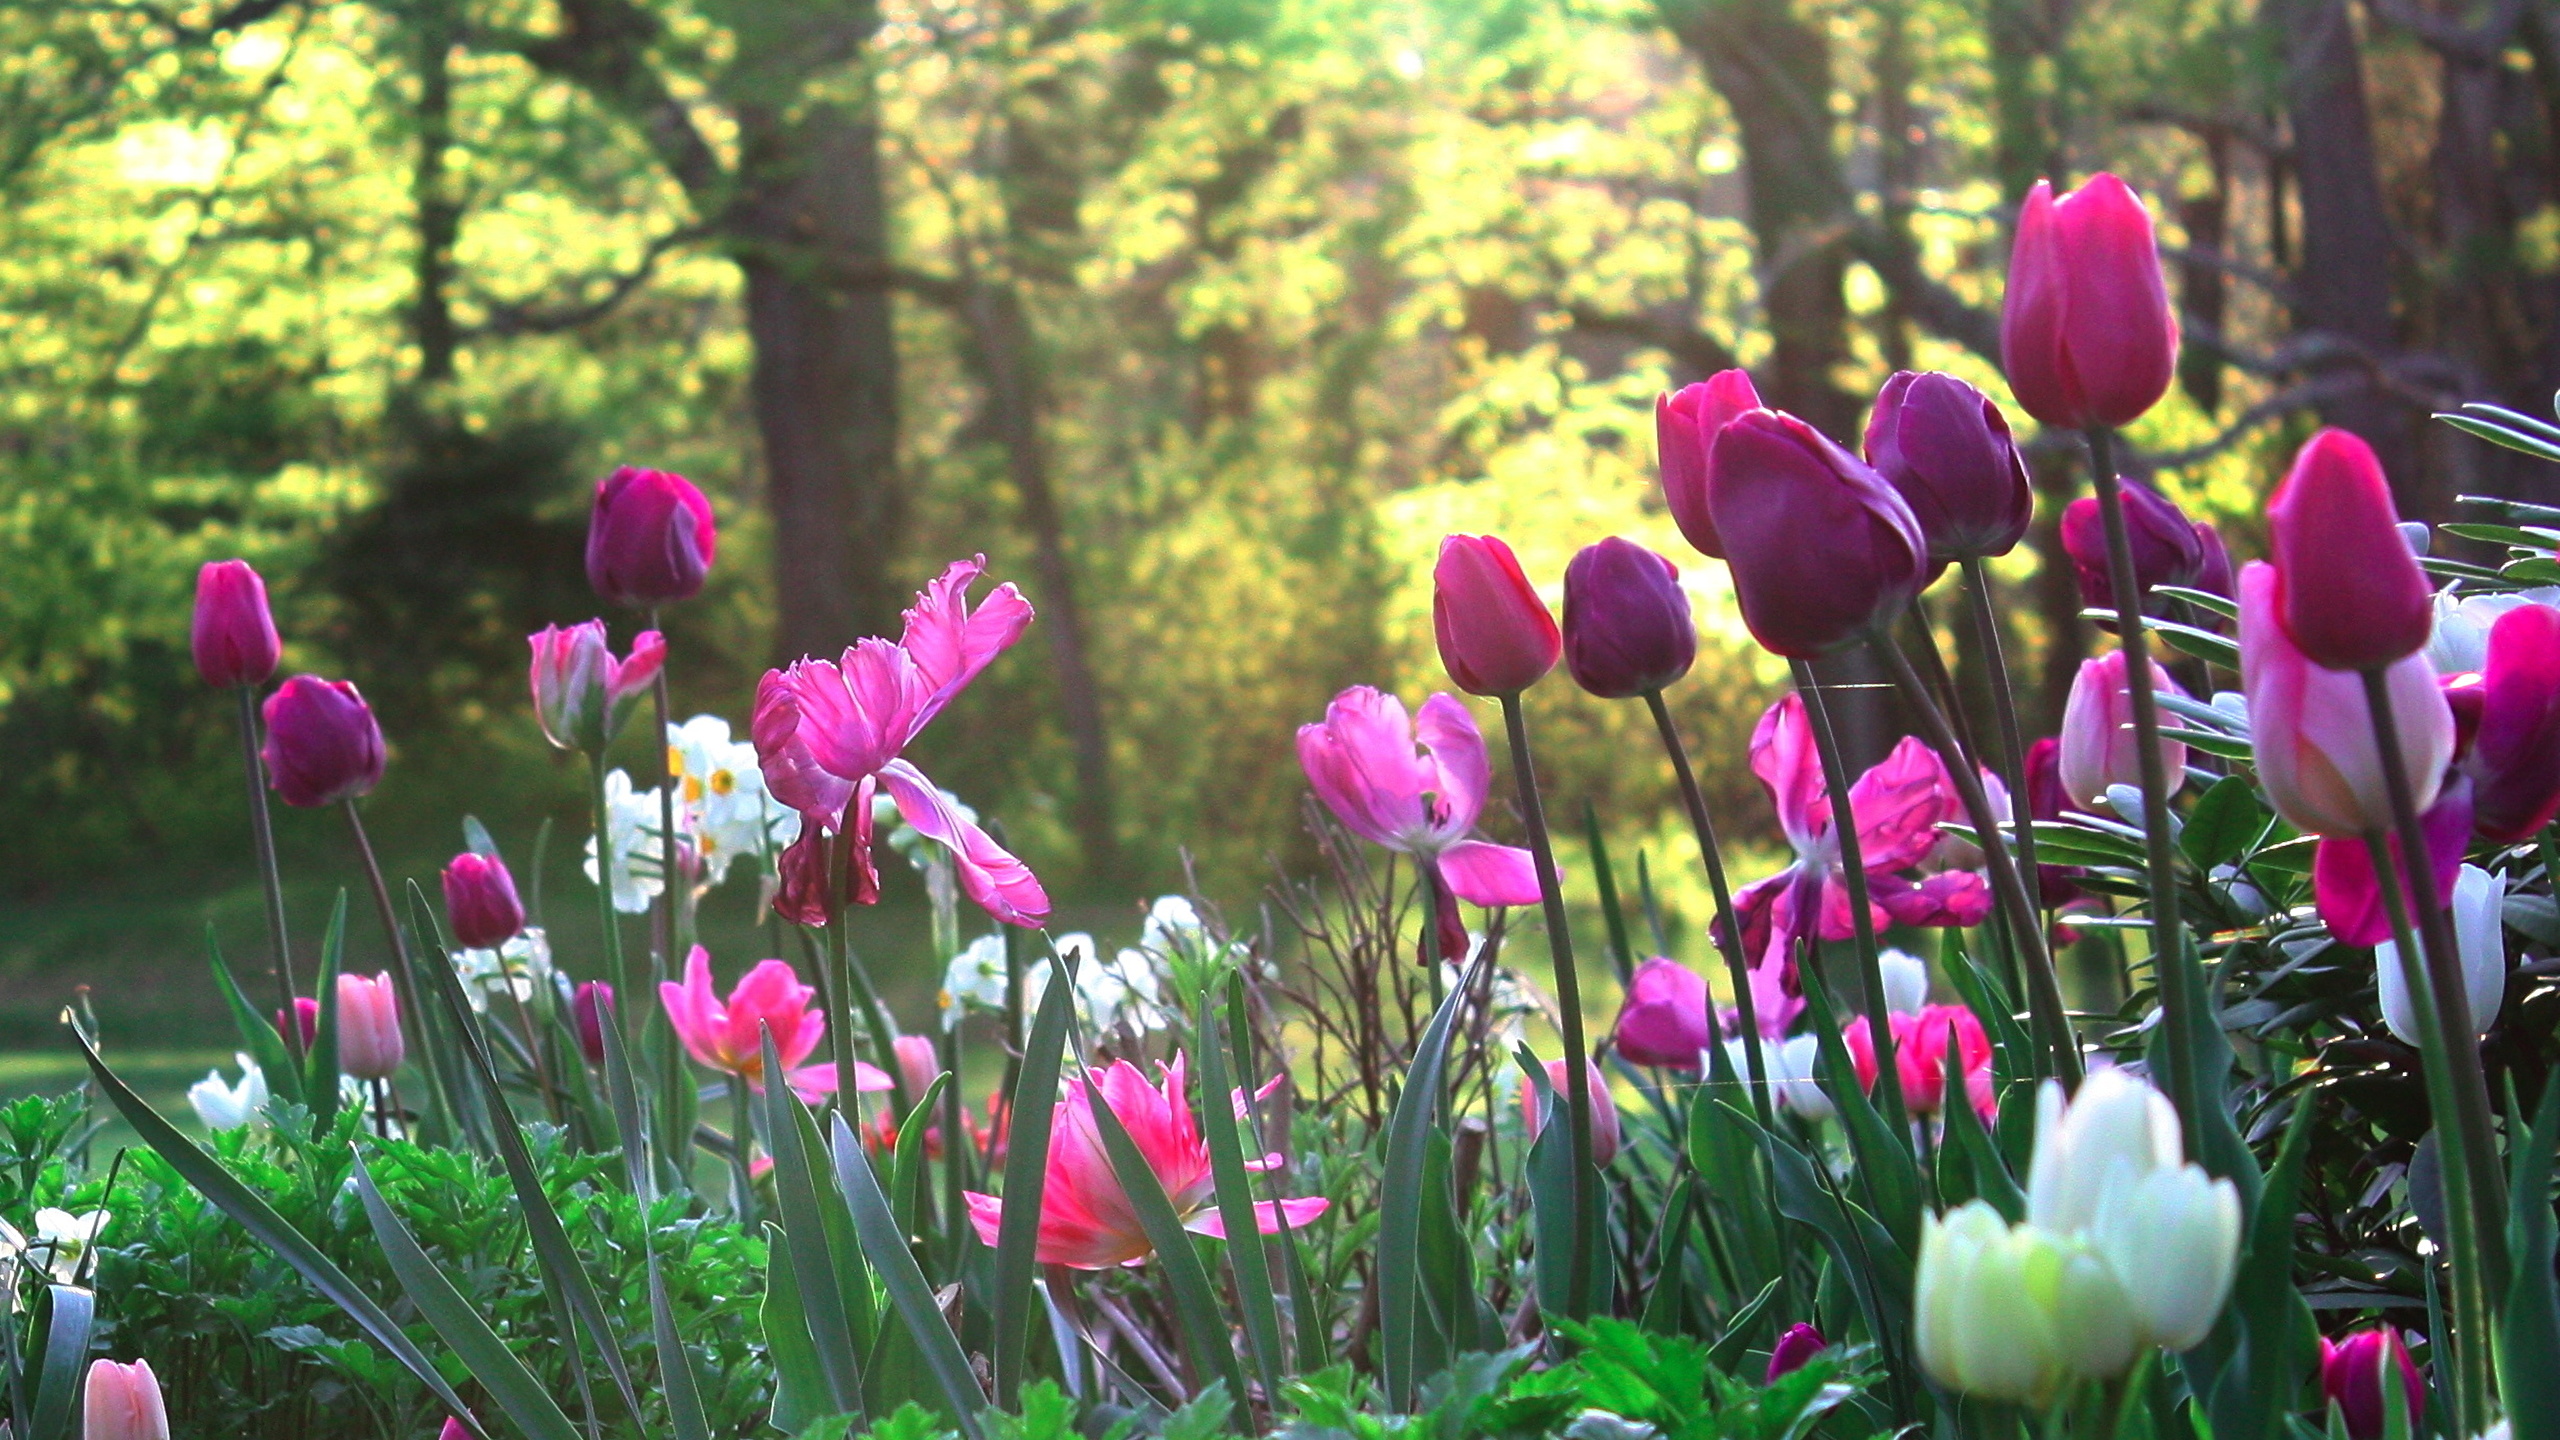 Картинки на заставку весенние цветы. Весенние цветы. Природа цветы. Поляна цветов. Весенние цветы тюльпаны.